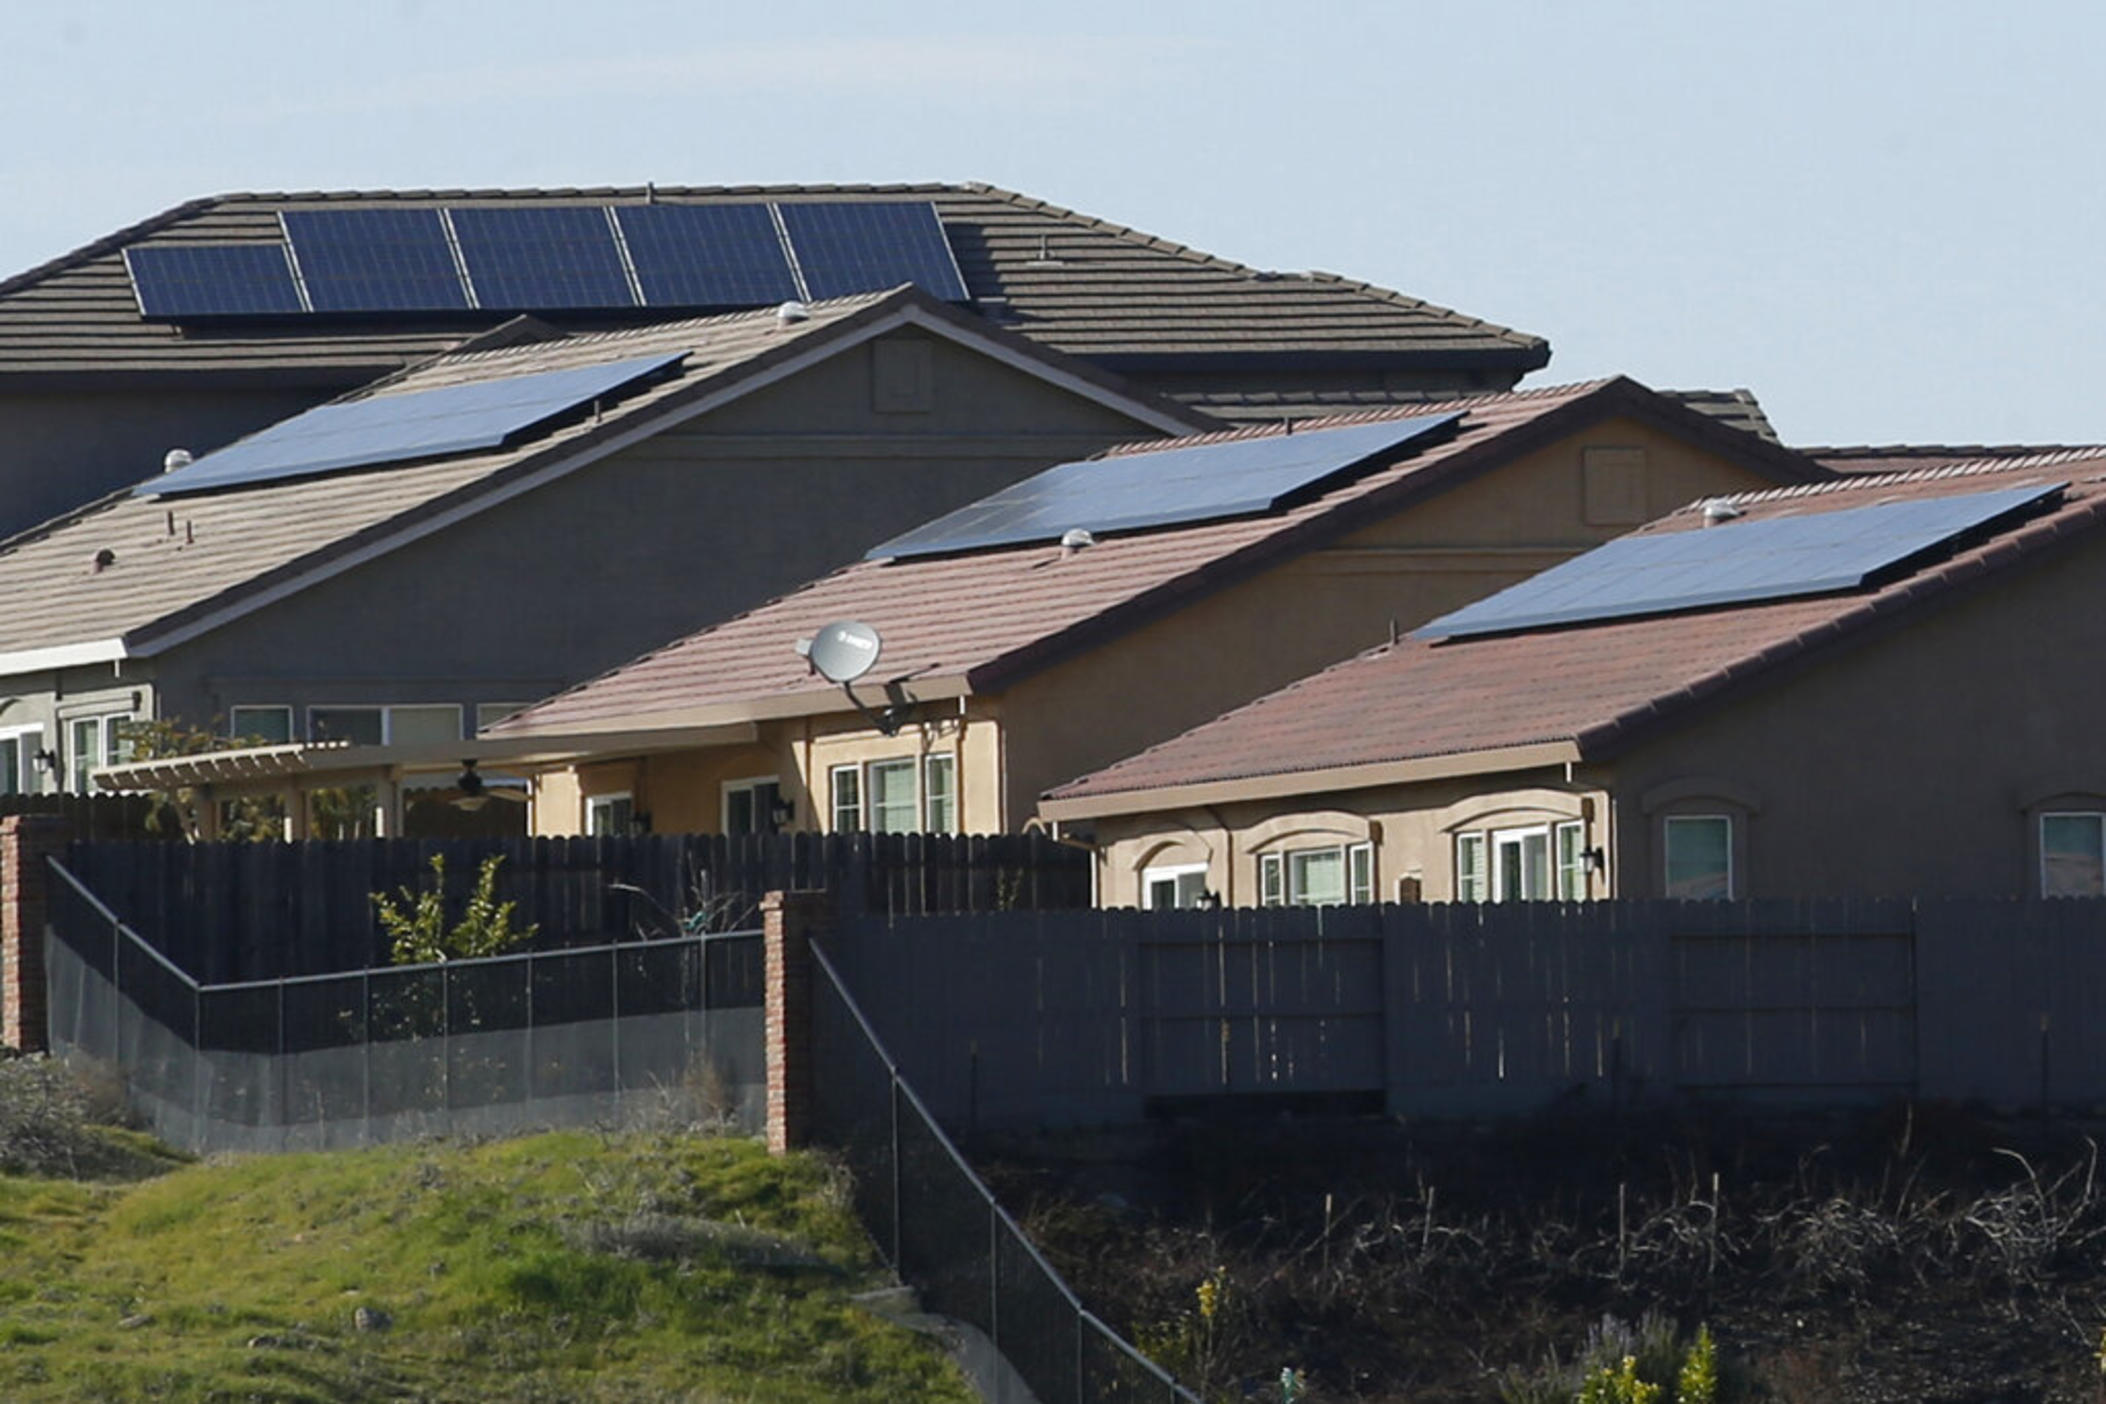 Solar panels on rooftops of a housing development in Folsom, Calif., Feb. 12, 2020.